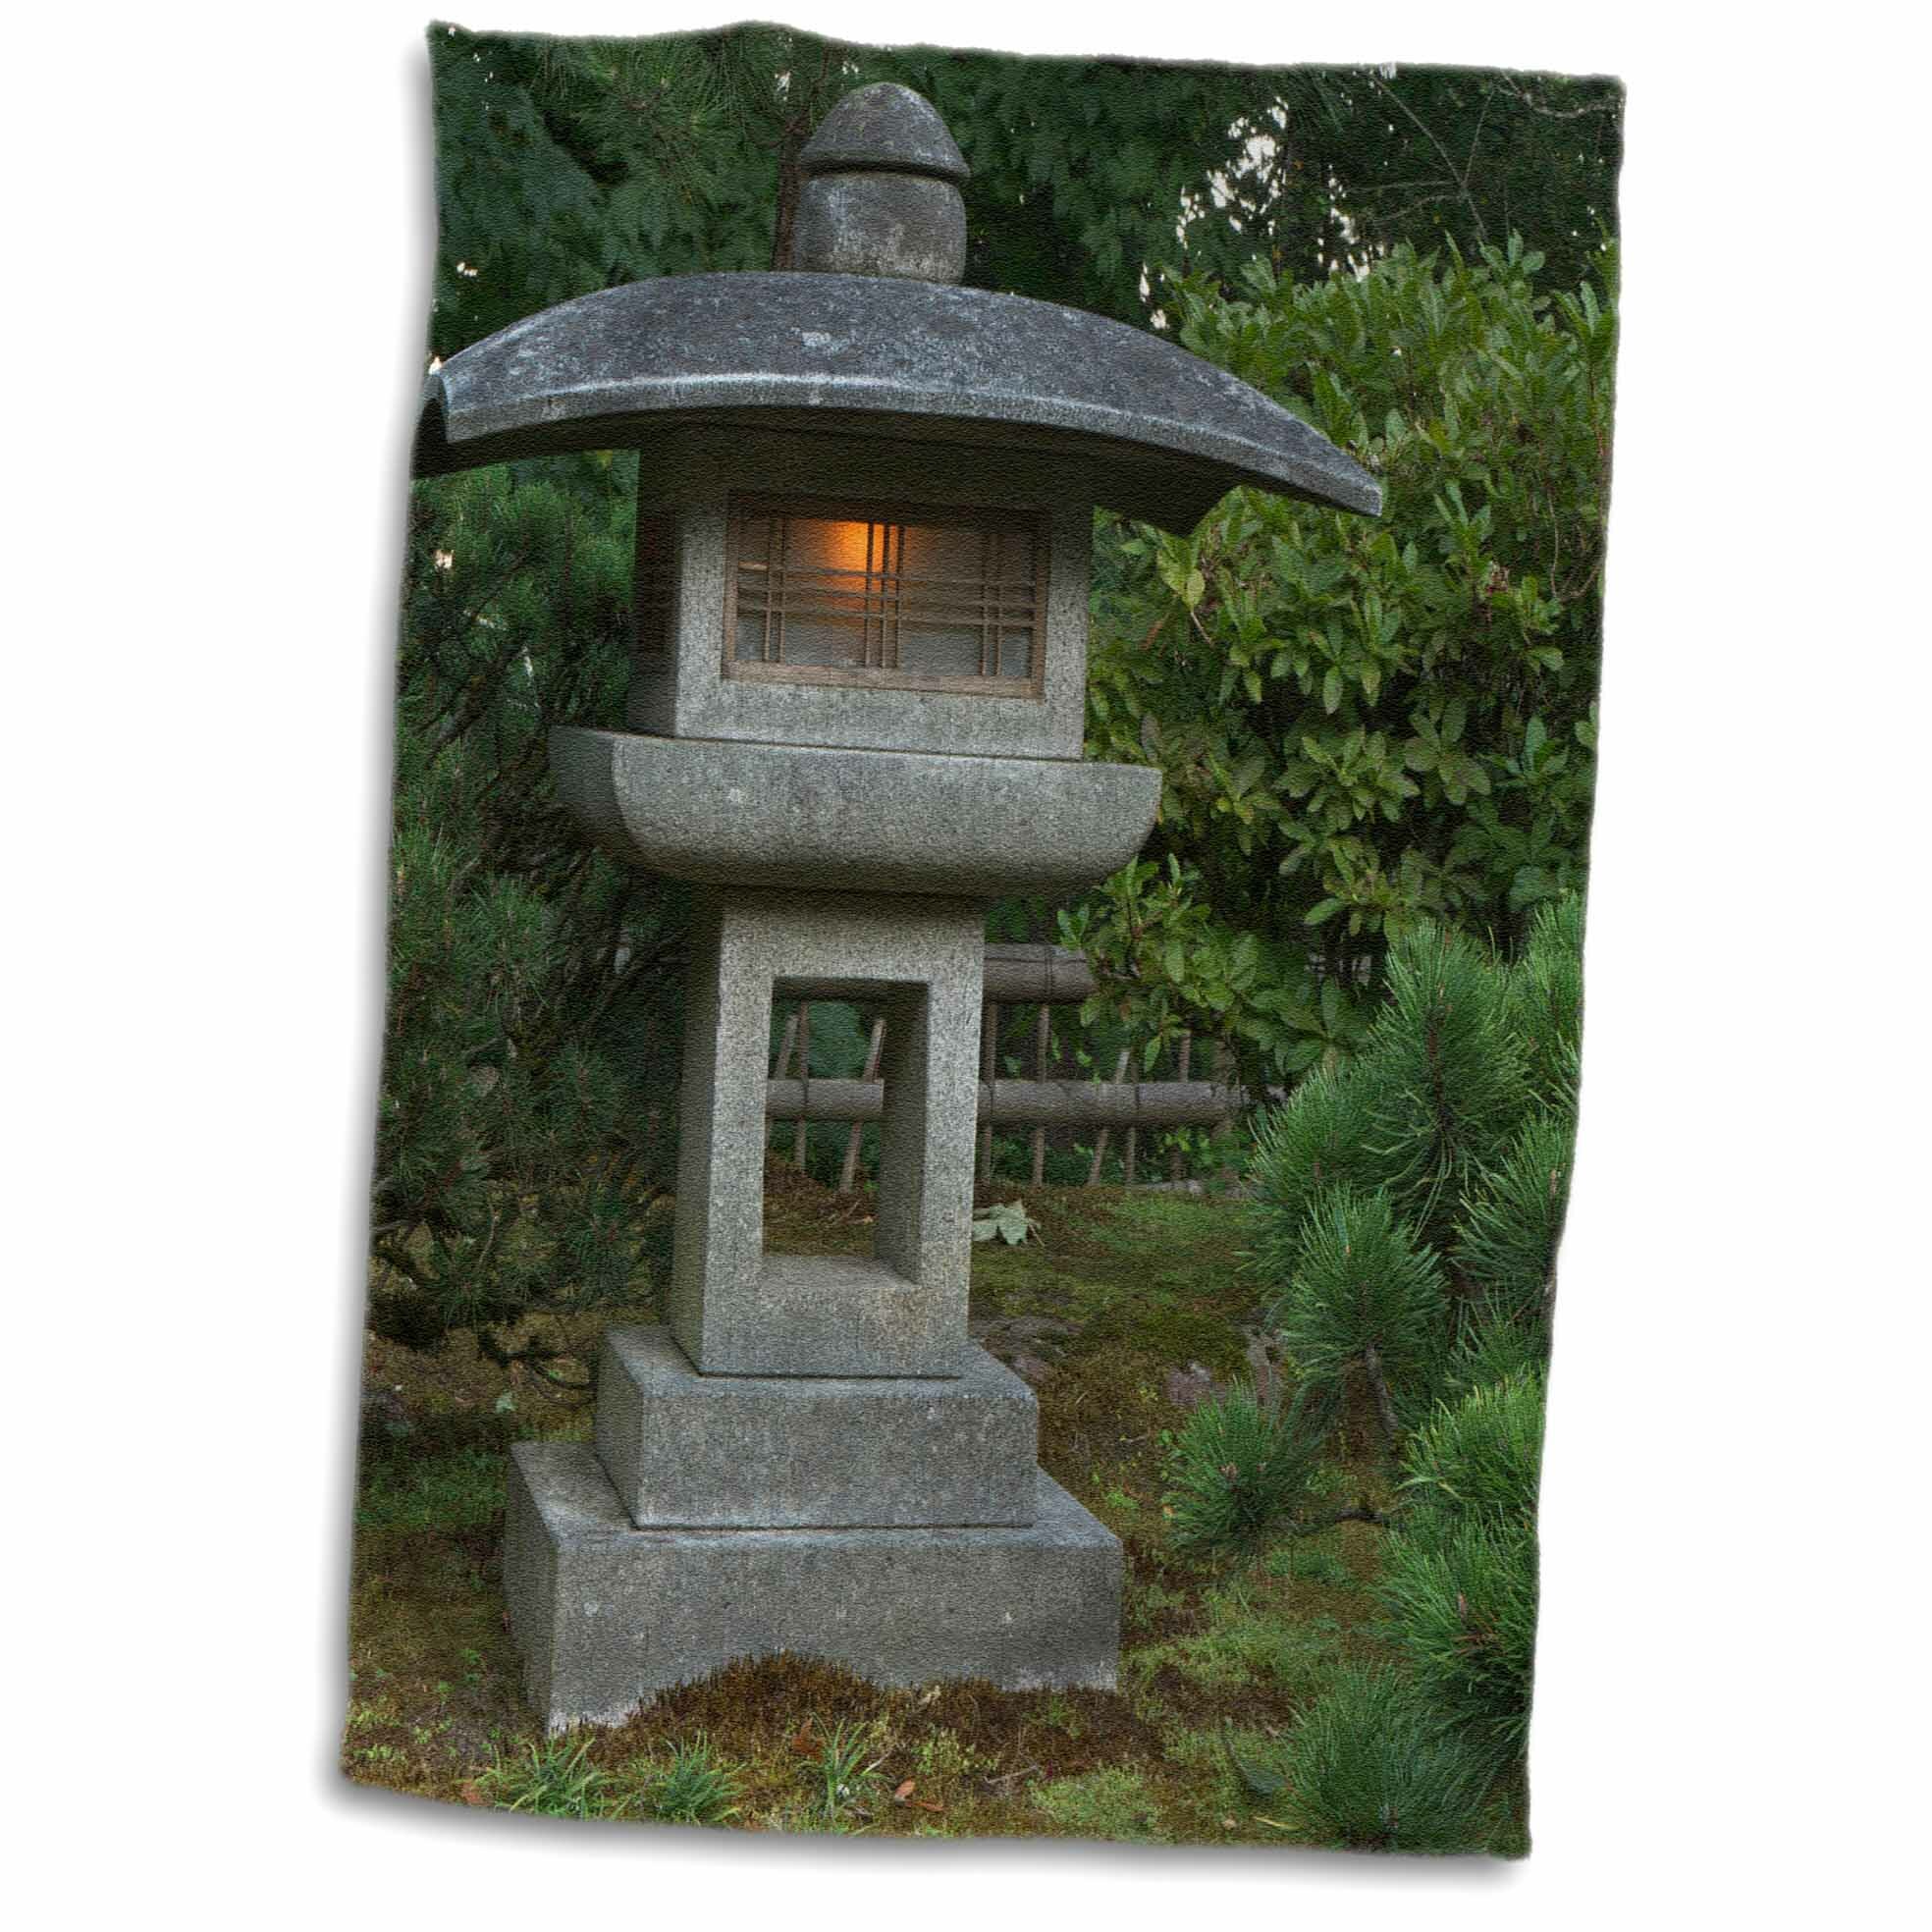 Symple Stuff Stone Lantern In Portland Japanese Garden Usa William Sutton Hand Towel Reviews Wayfairca